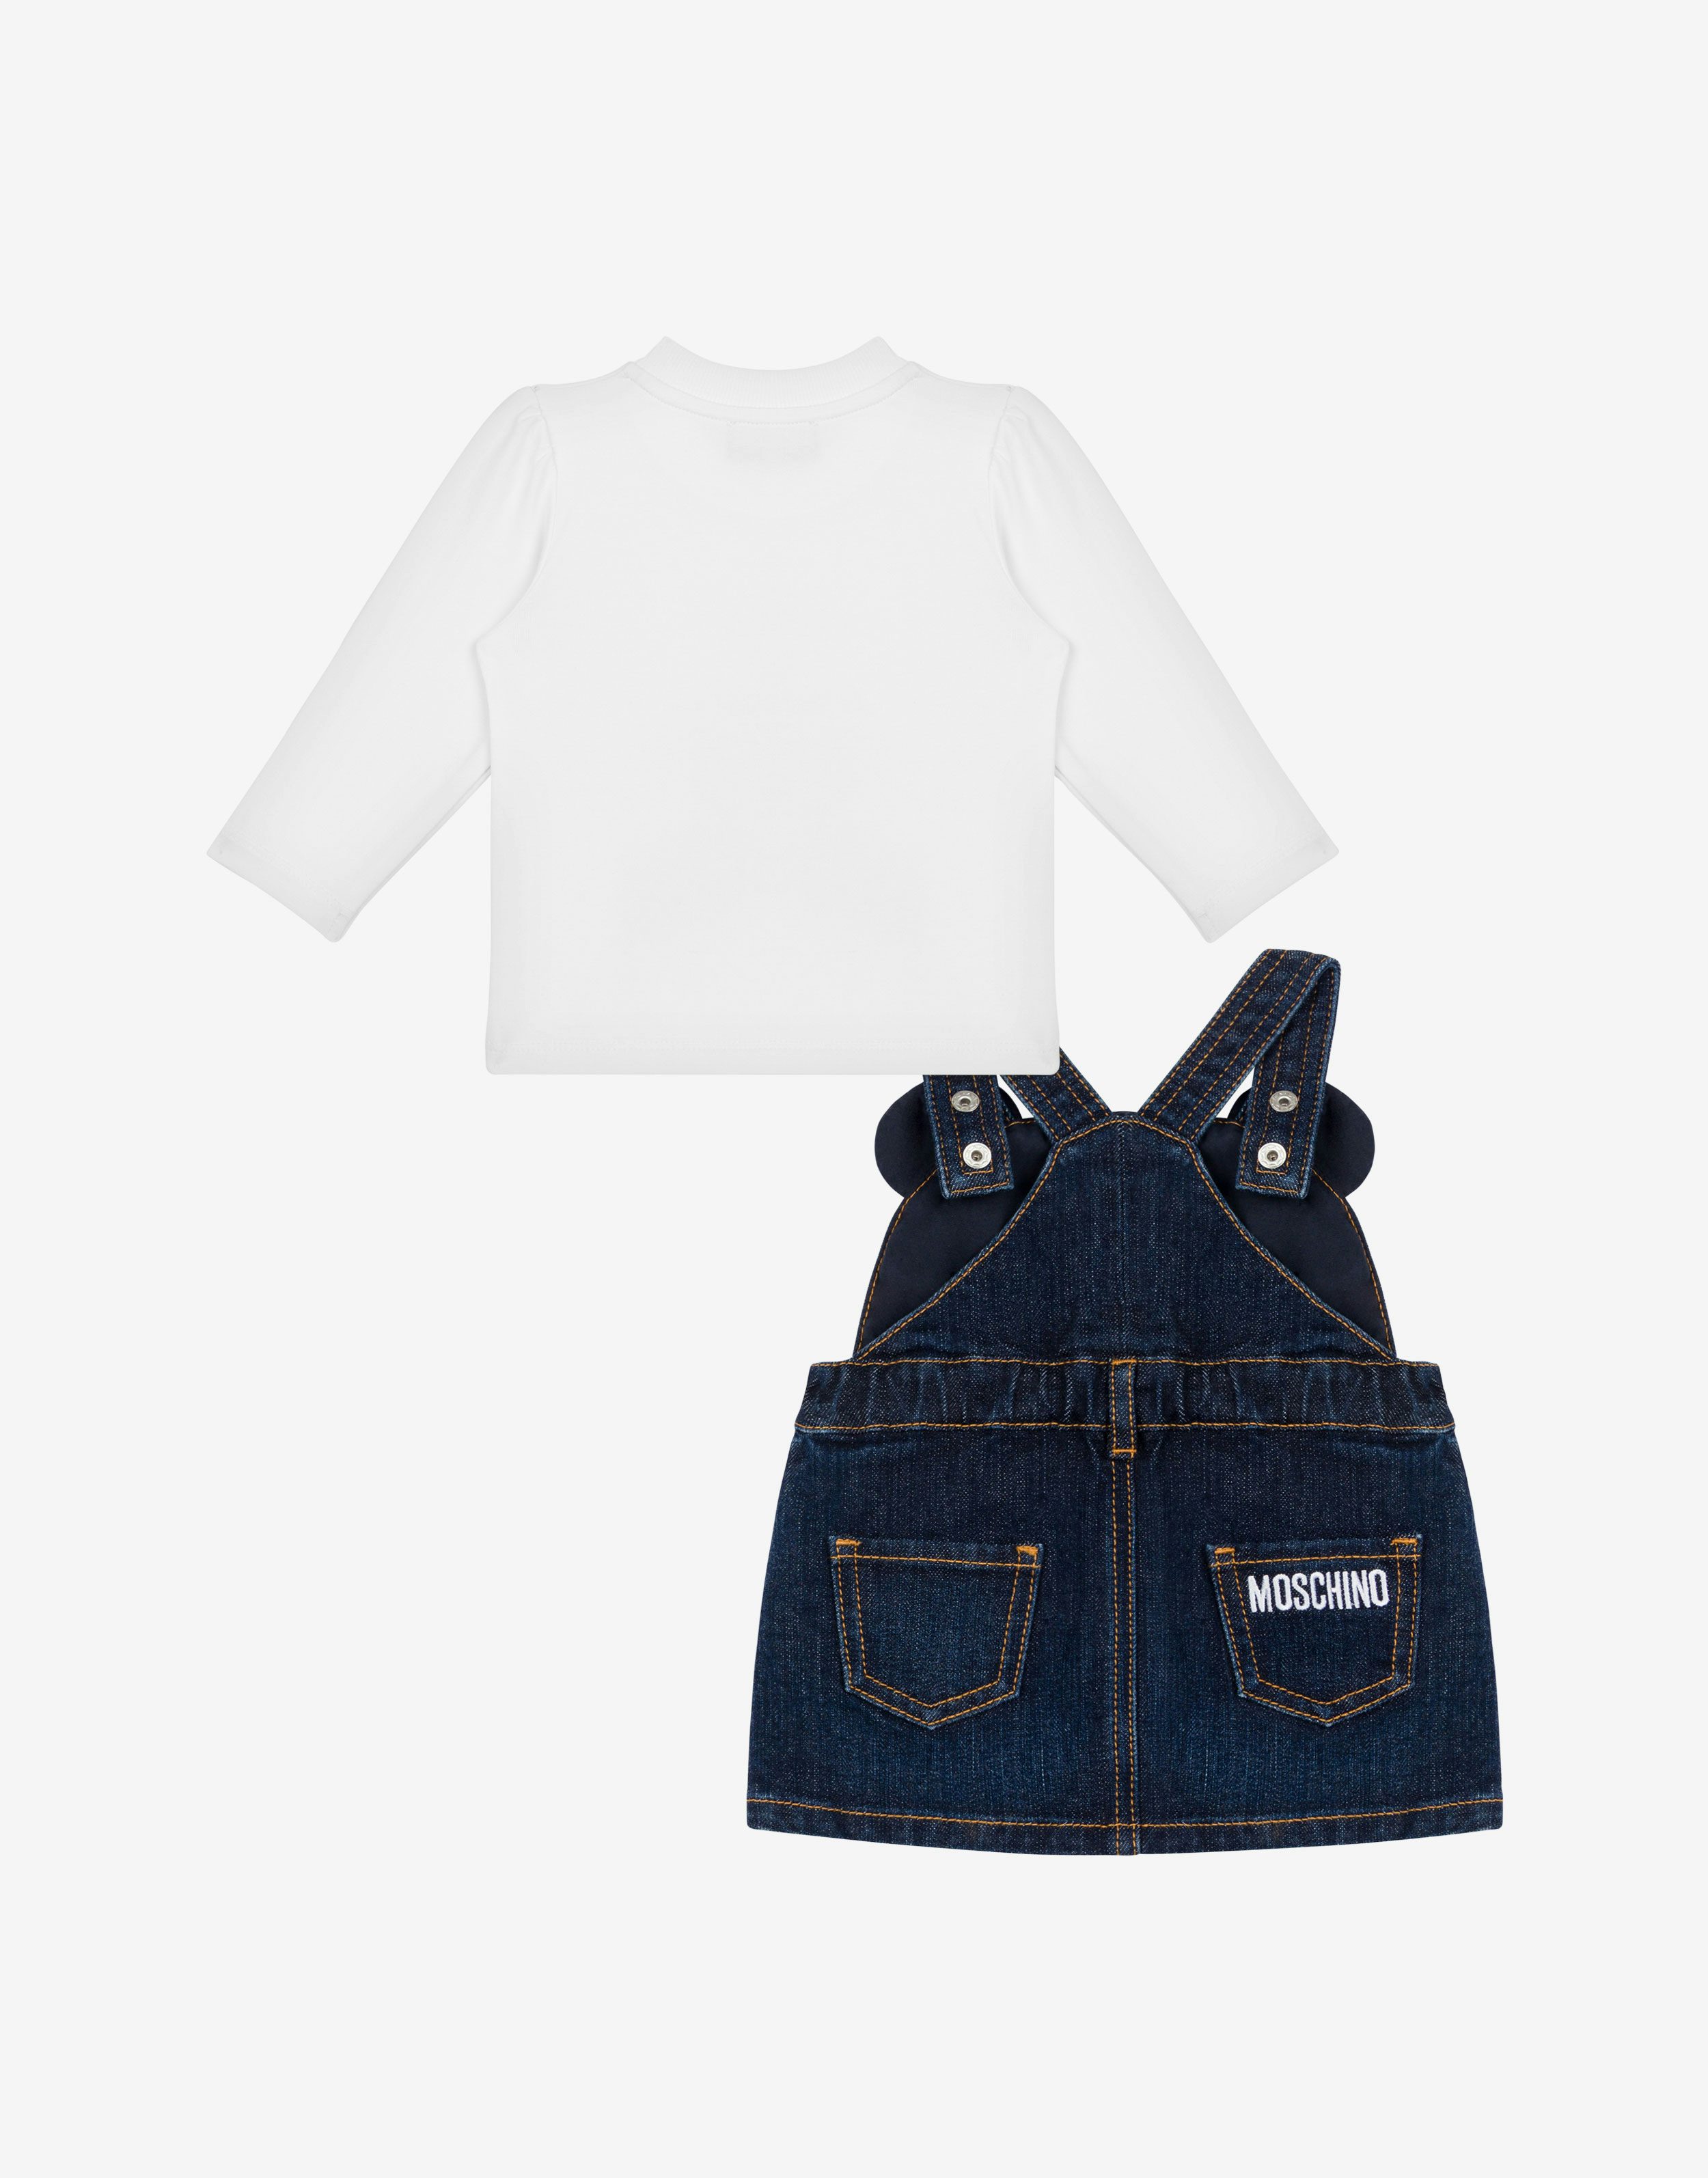 Moschino Teddy Bear T-shirt and dungaree skirt co-ord set 0